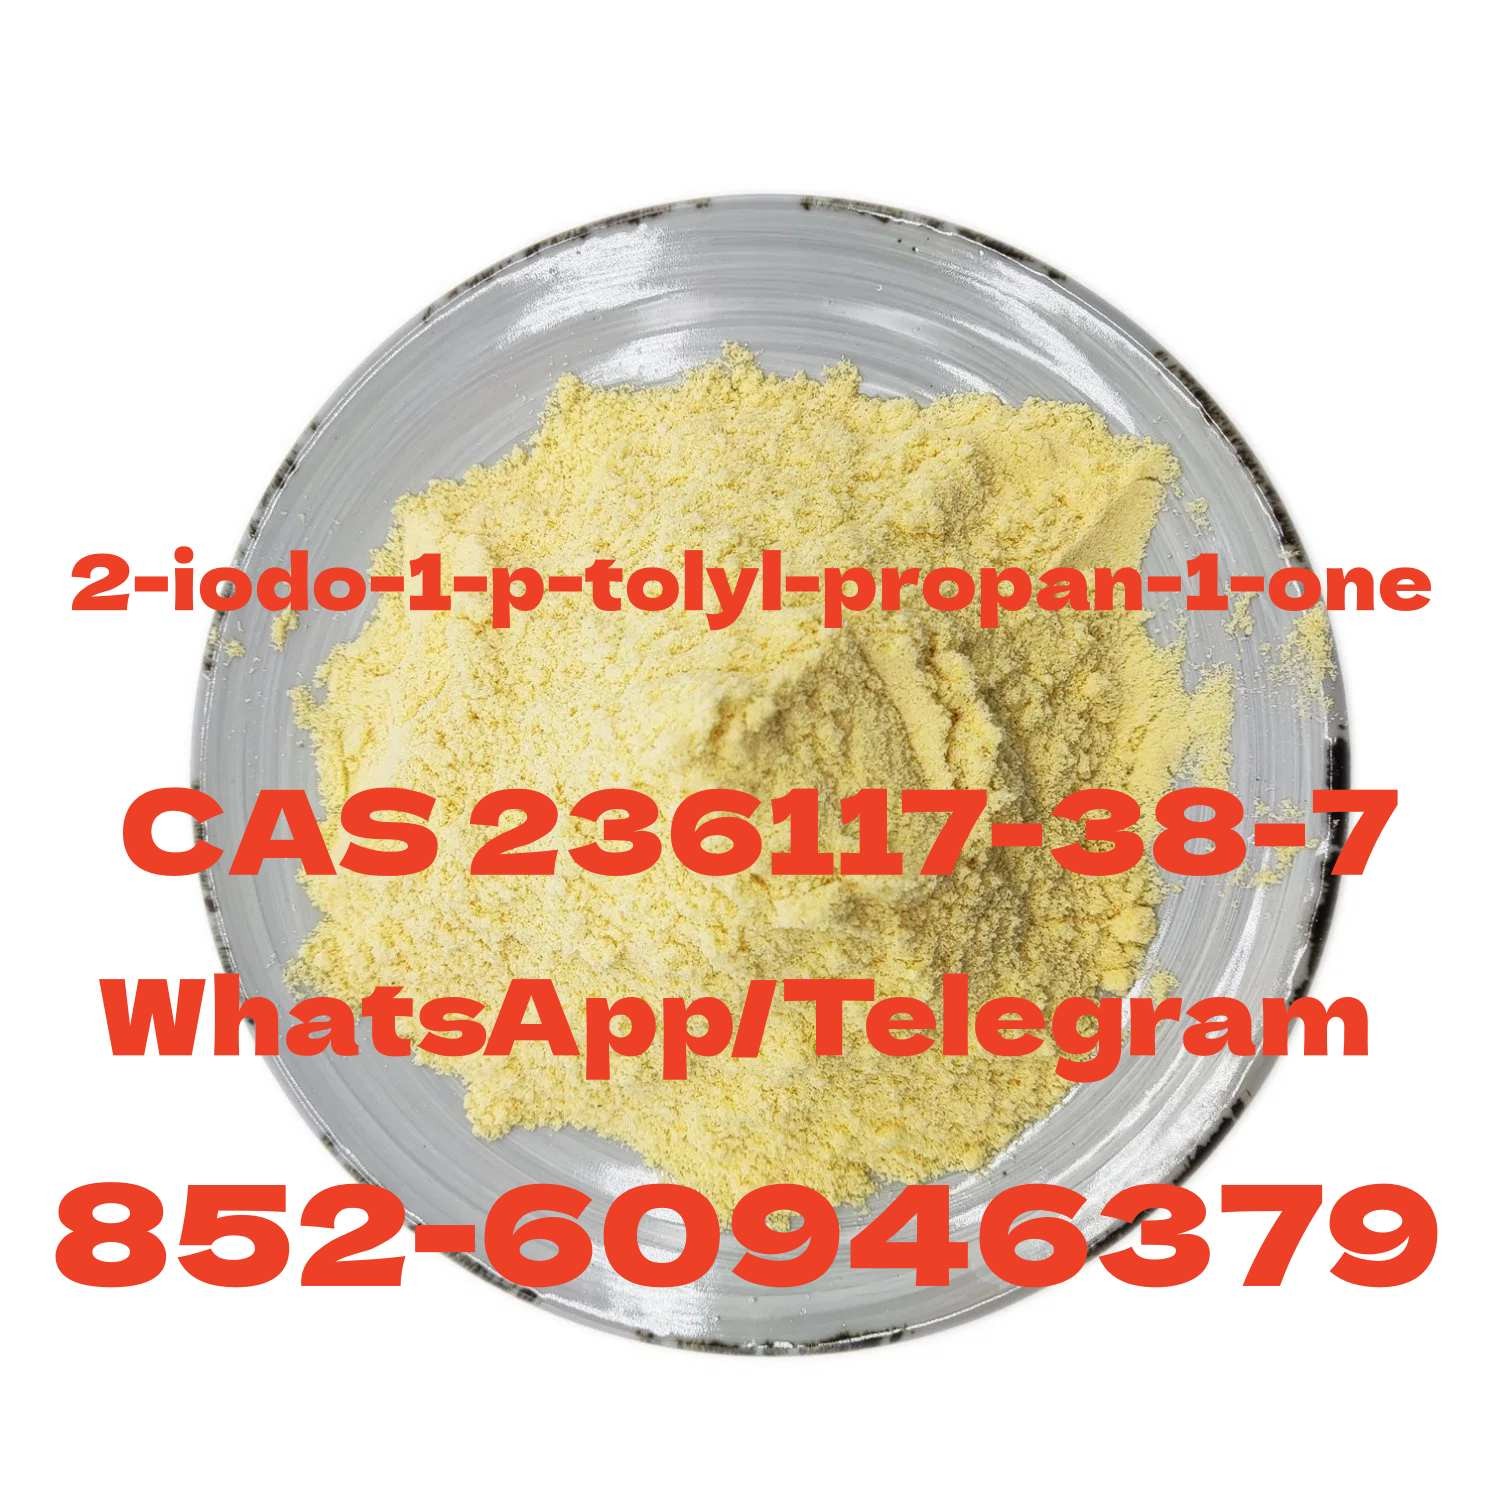 2-iodo-1-p-tolyl-propan-1-one  CAS 236117-38-7-image